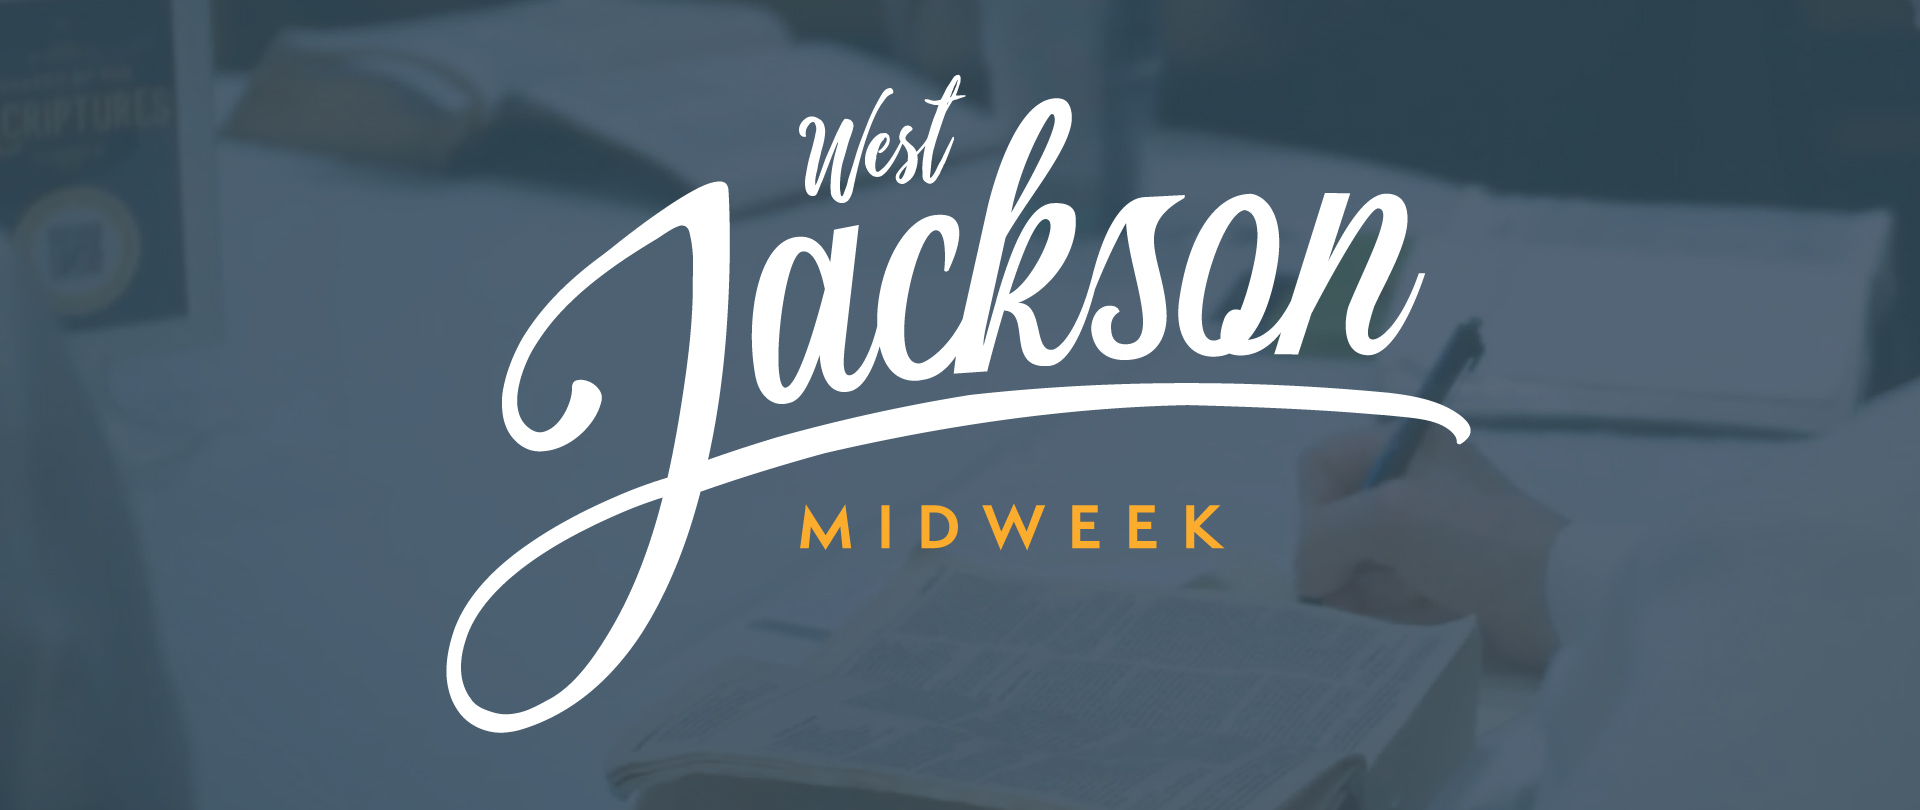 West Jackson Midweek